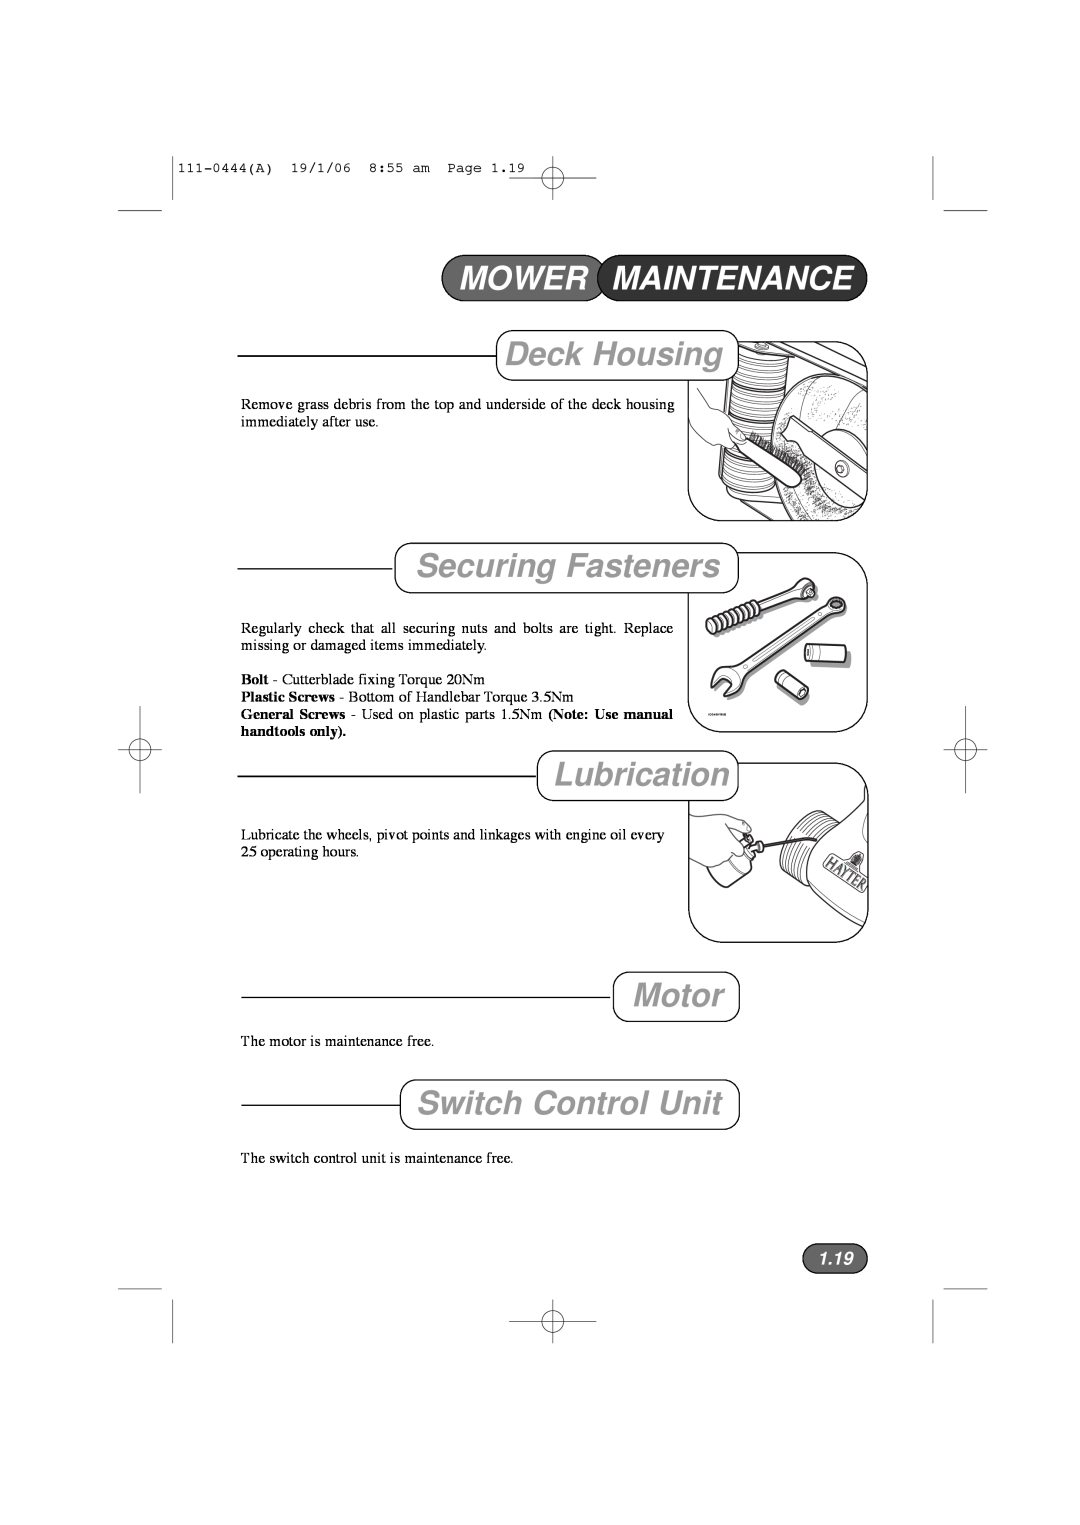 Hayter Mowers 100D Mower Maintenance, Deck Housing, Securing Fasteners, Lubrication, Motor, Switch Control Unit, 1.19 